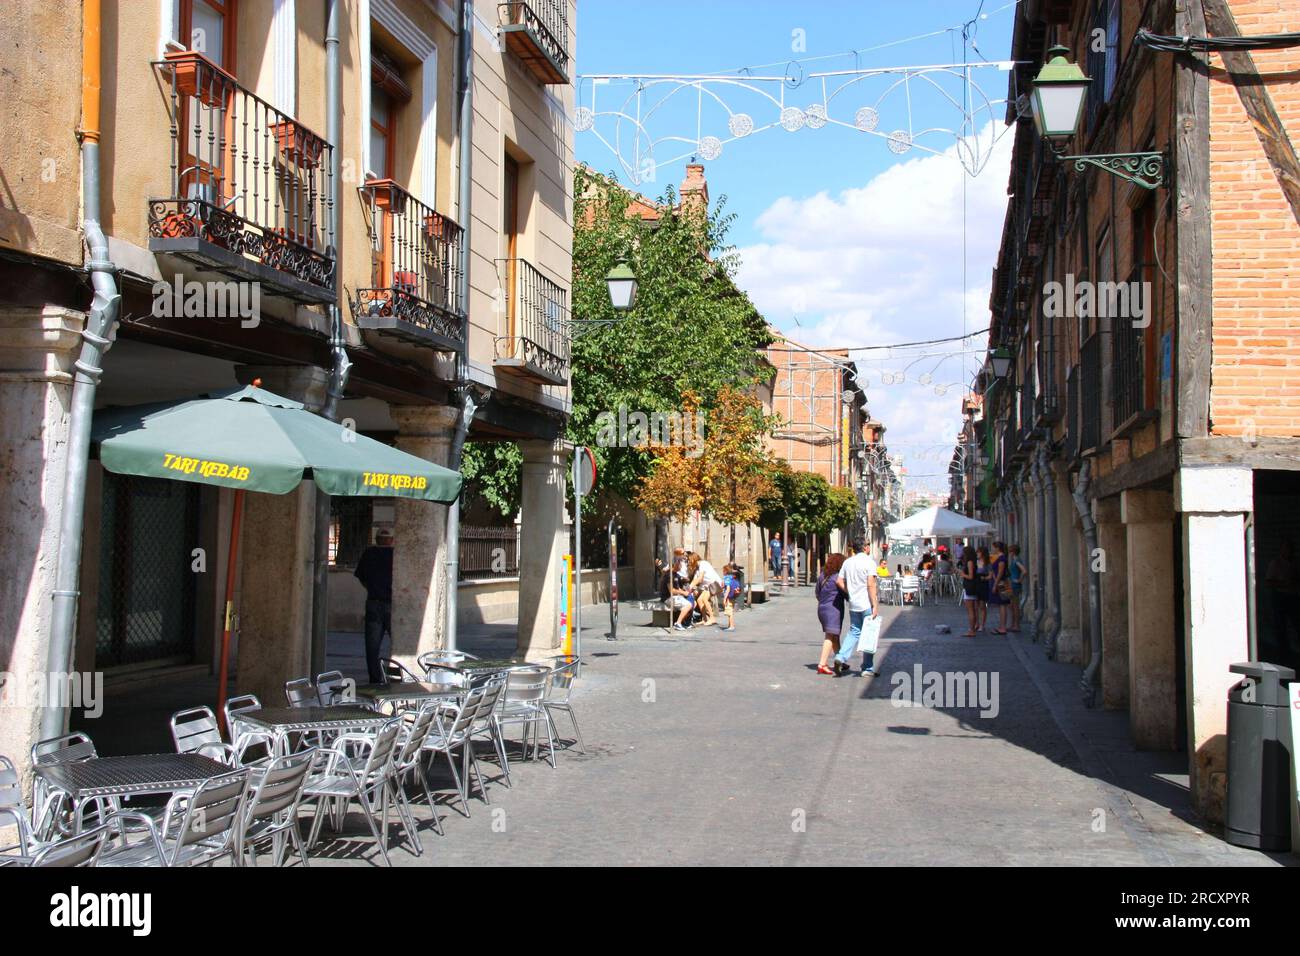 ALCALA DE HENARES, SPAIN - SEPTEMBER 5, 2009: People visit Calle Mayor street in Alcala de Henares in Spain. Stock Photo